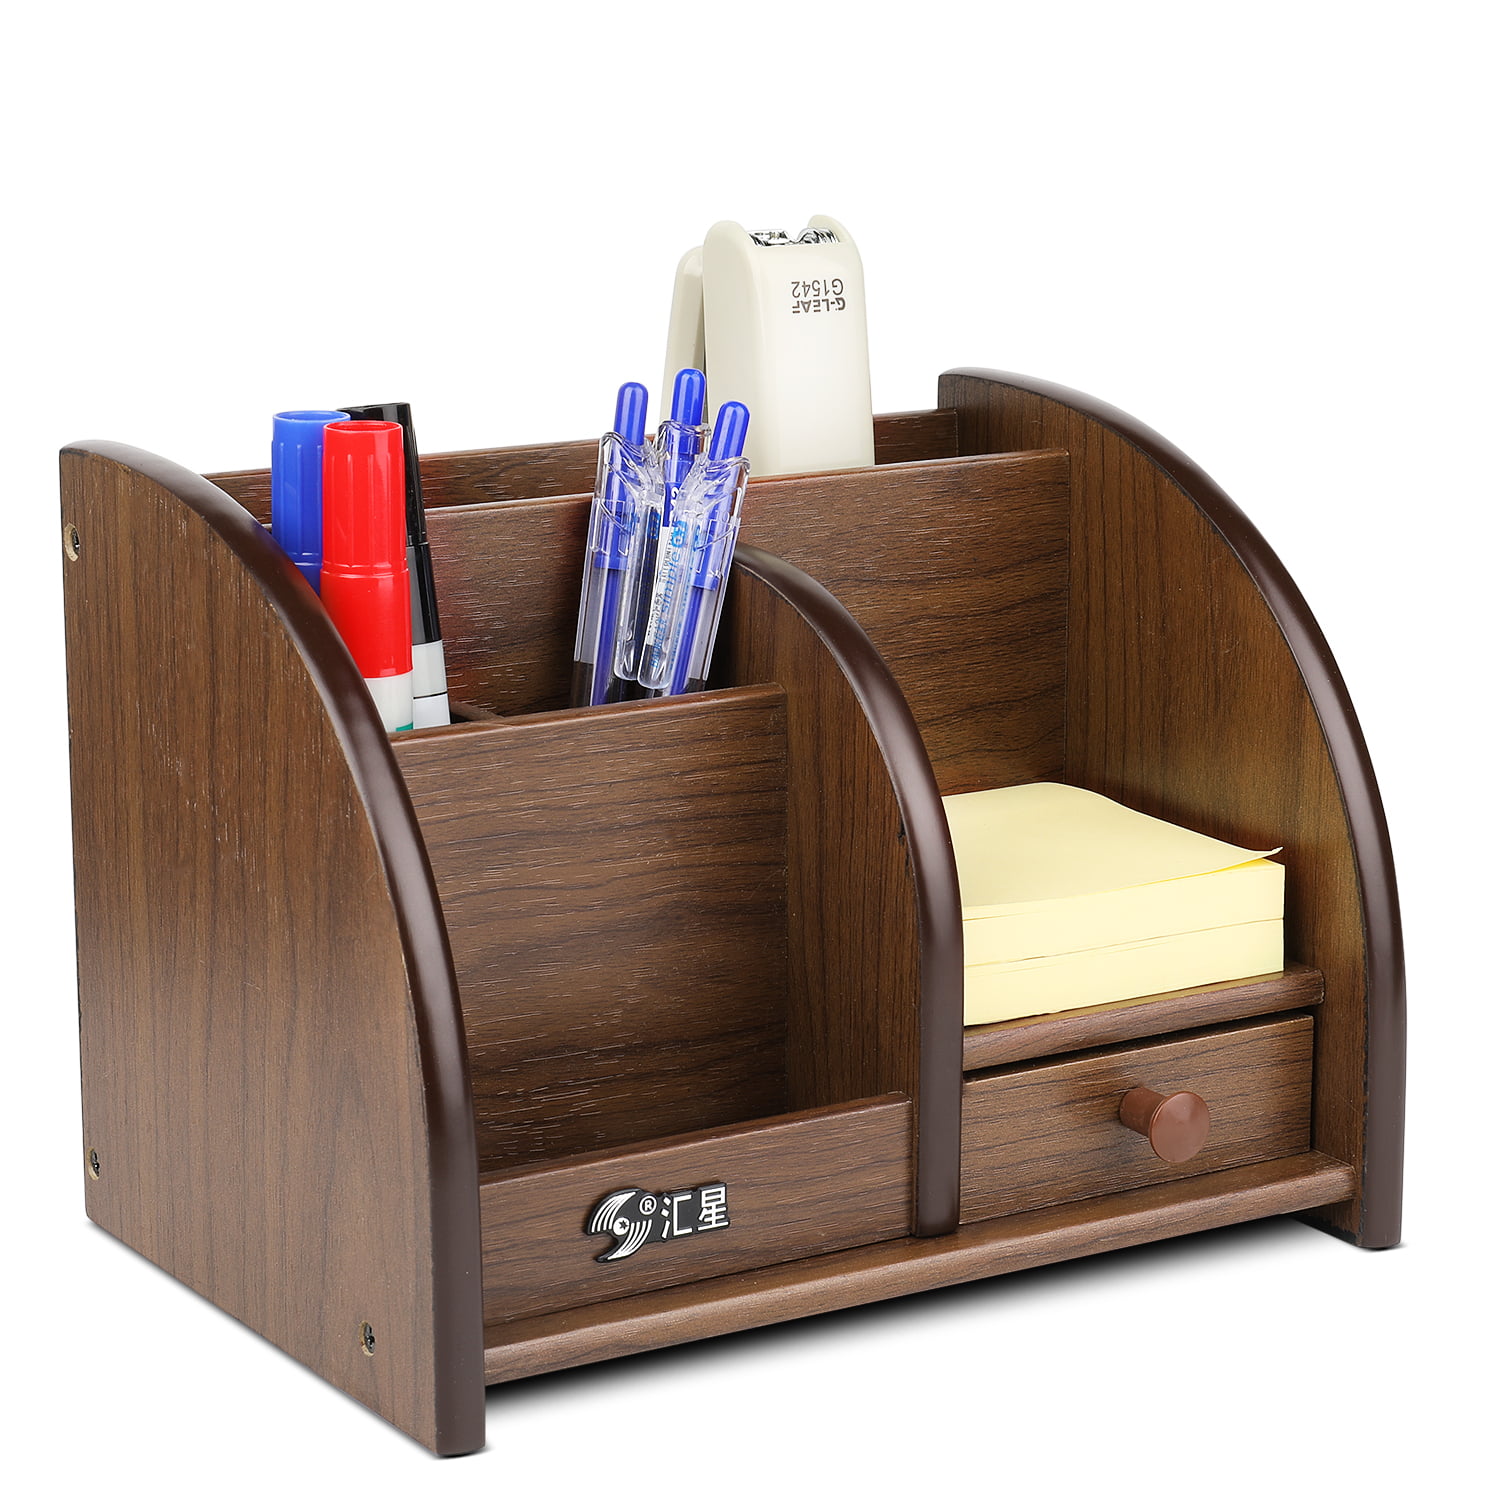 Flexzion Wooden Desk Organizer w/Drawers - Classic Wood Office Supplies Accessories Desktop Tabletop Sorter Shelf Rack Cherry Brown Pencil Holder